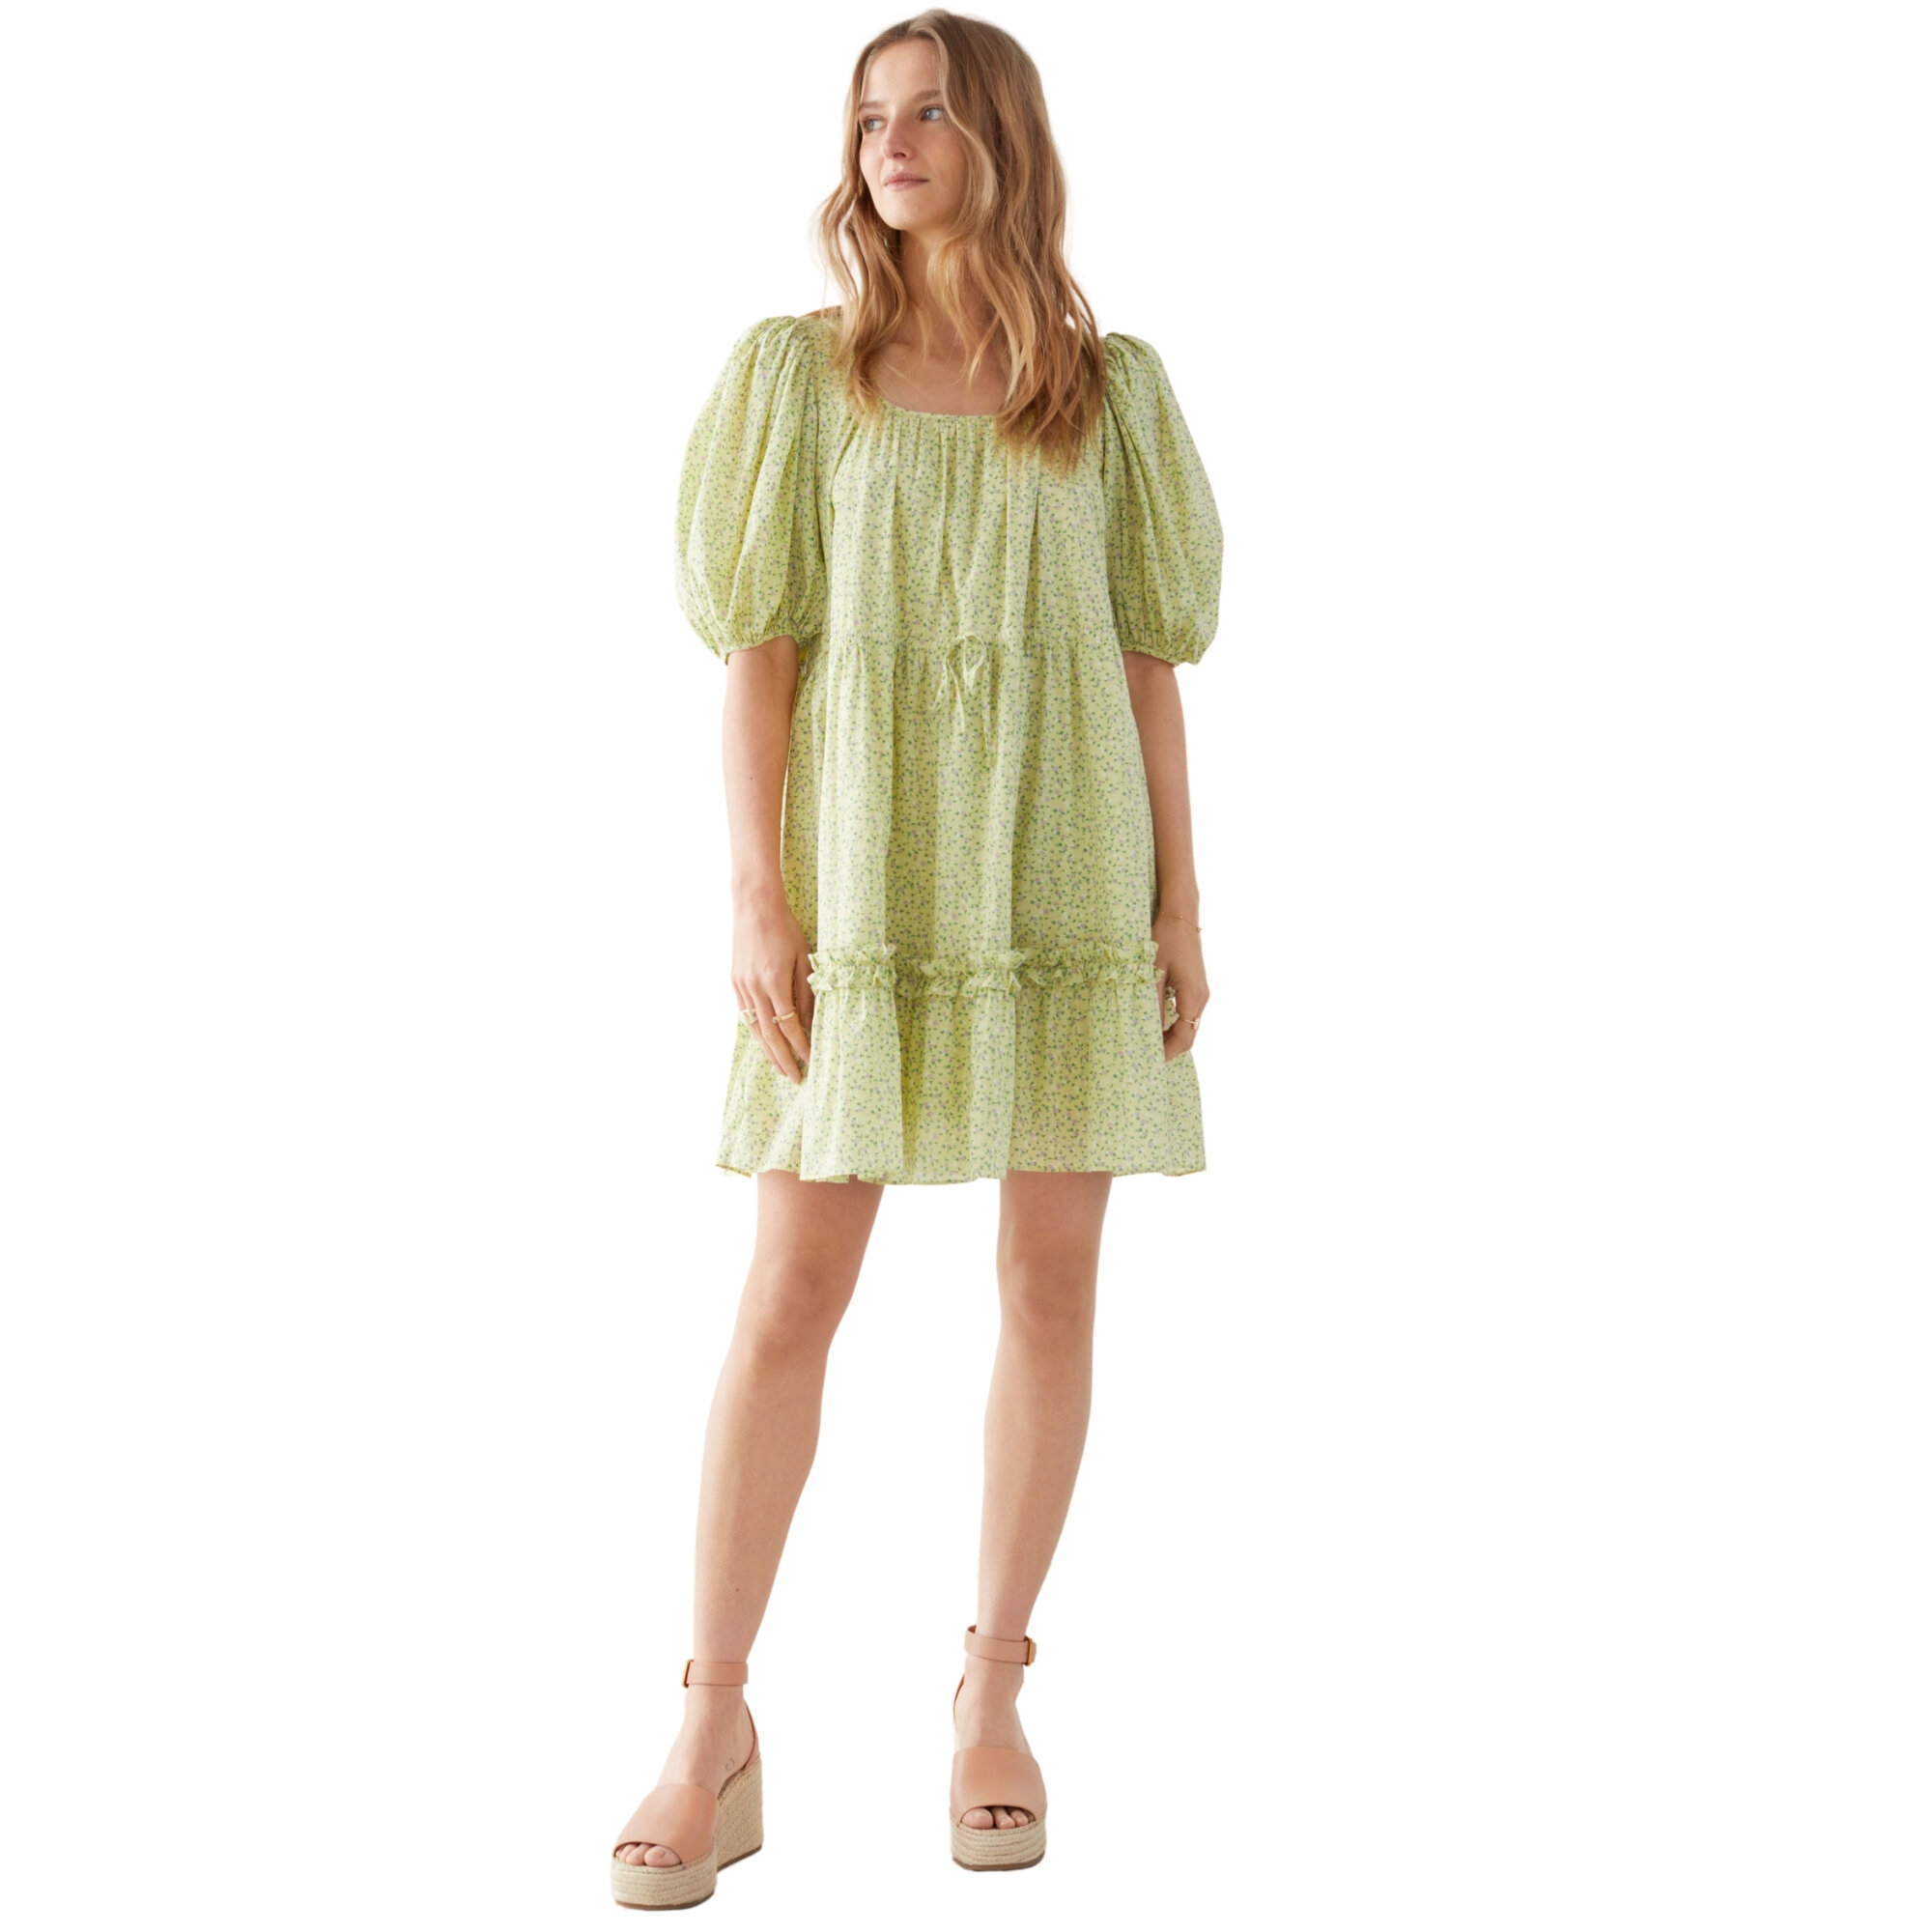 Voluminous Puff Sleeve Mini Dress, Other Stories, $119